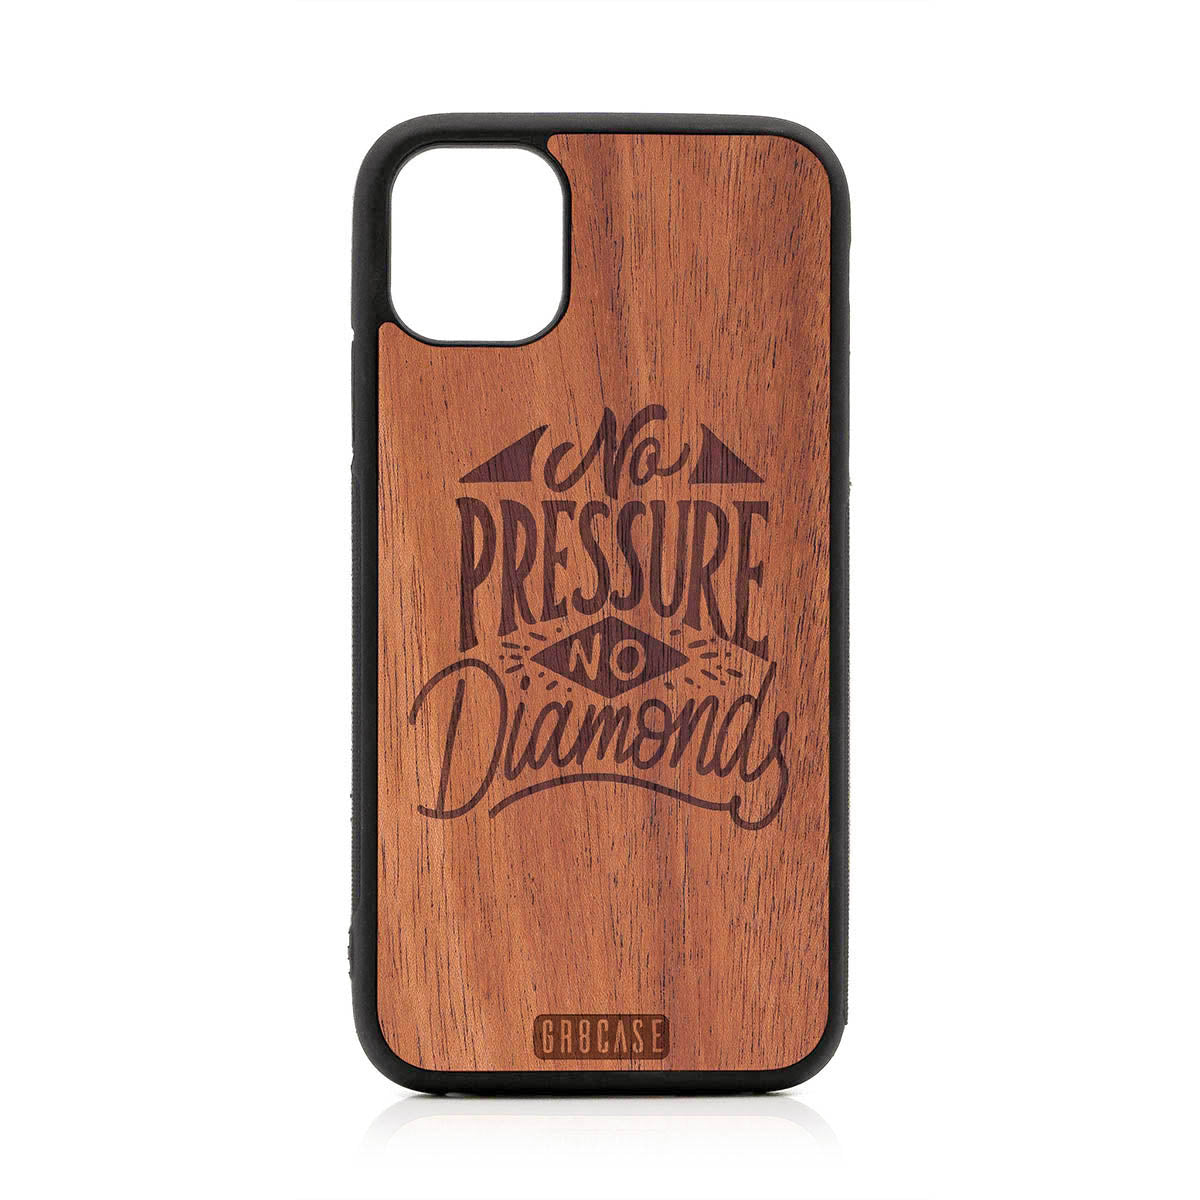 No Pressure No Diamonds Design Wood Case For iPhone 11